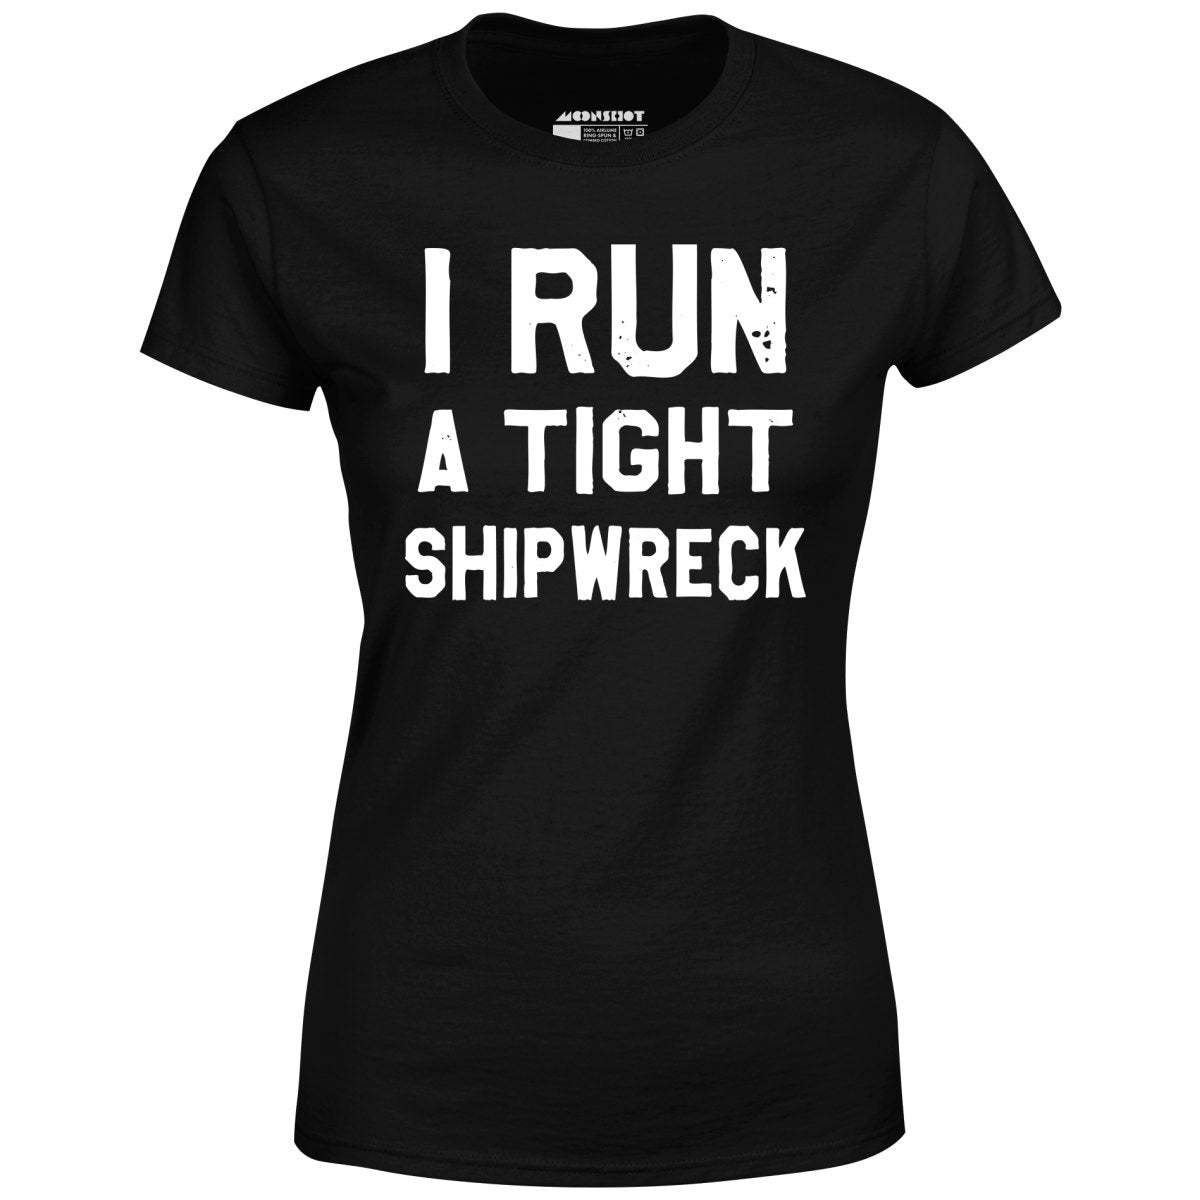 I Run a Tight Shipwreck - Women's T-Shirt